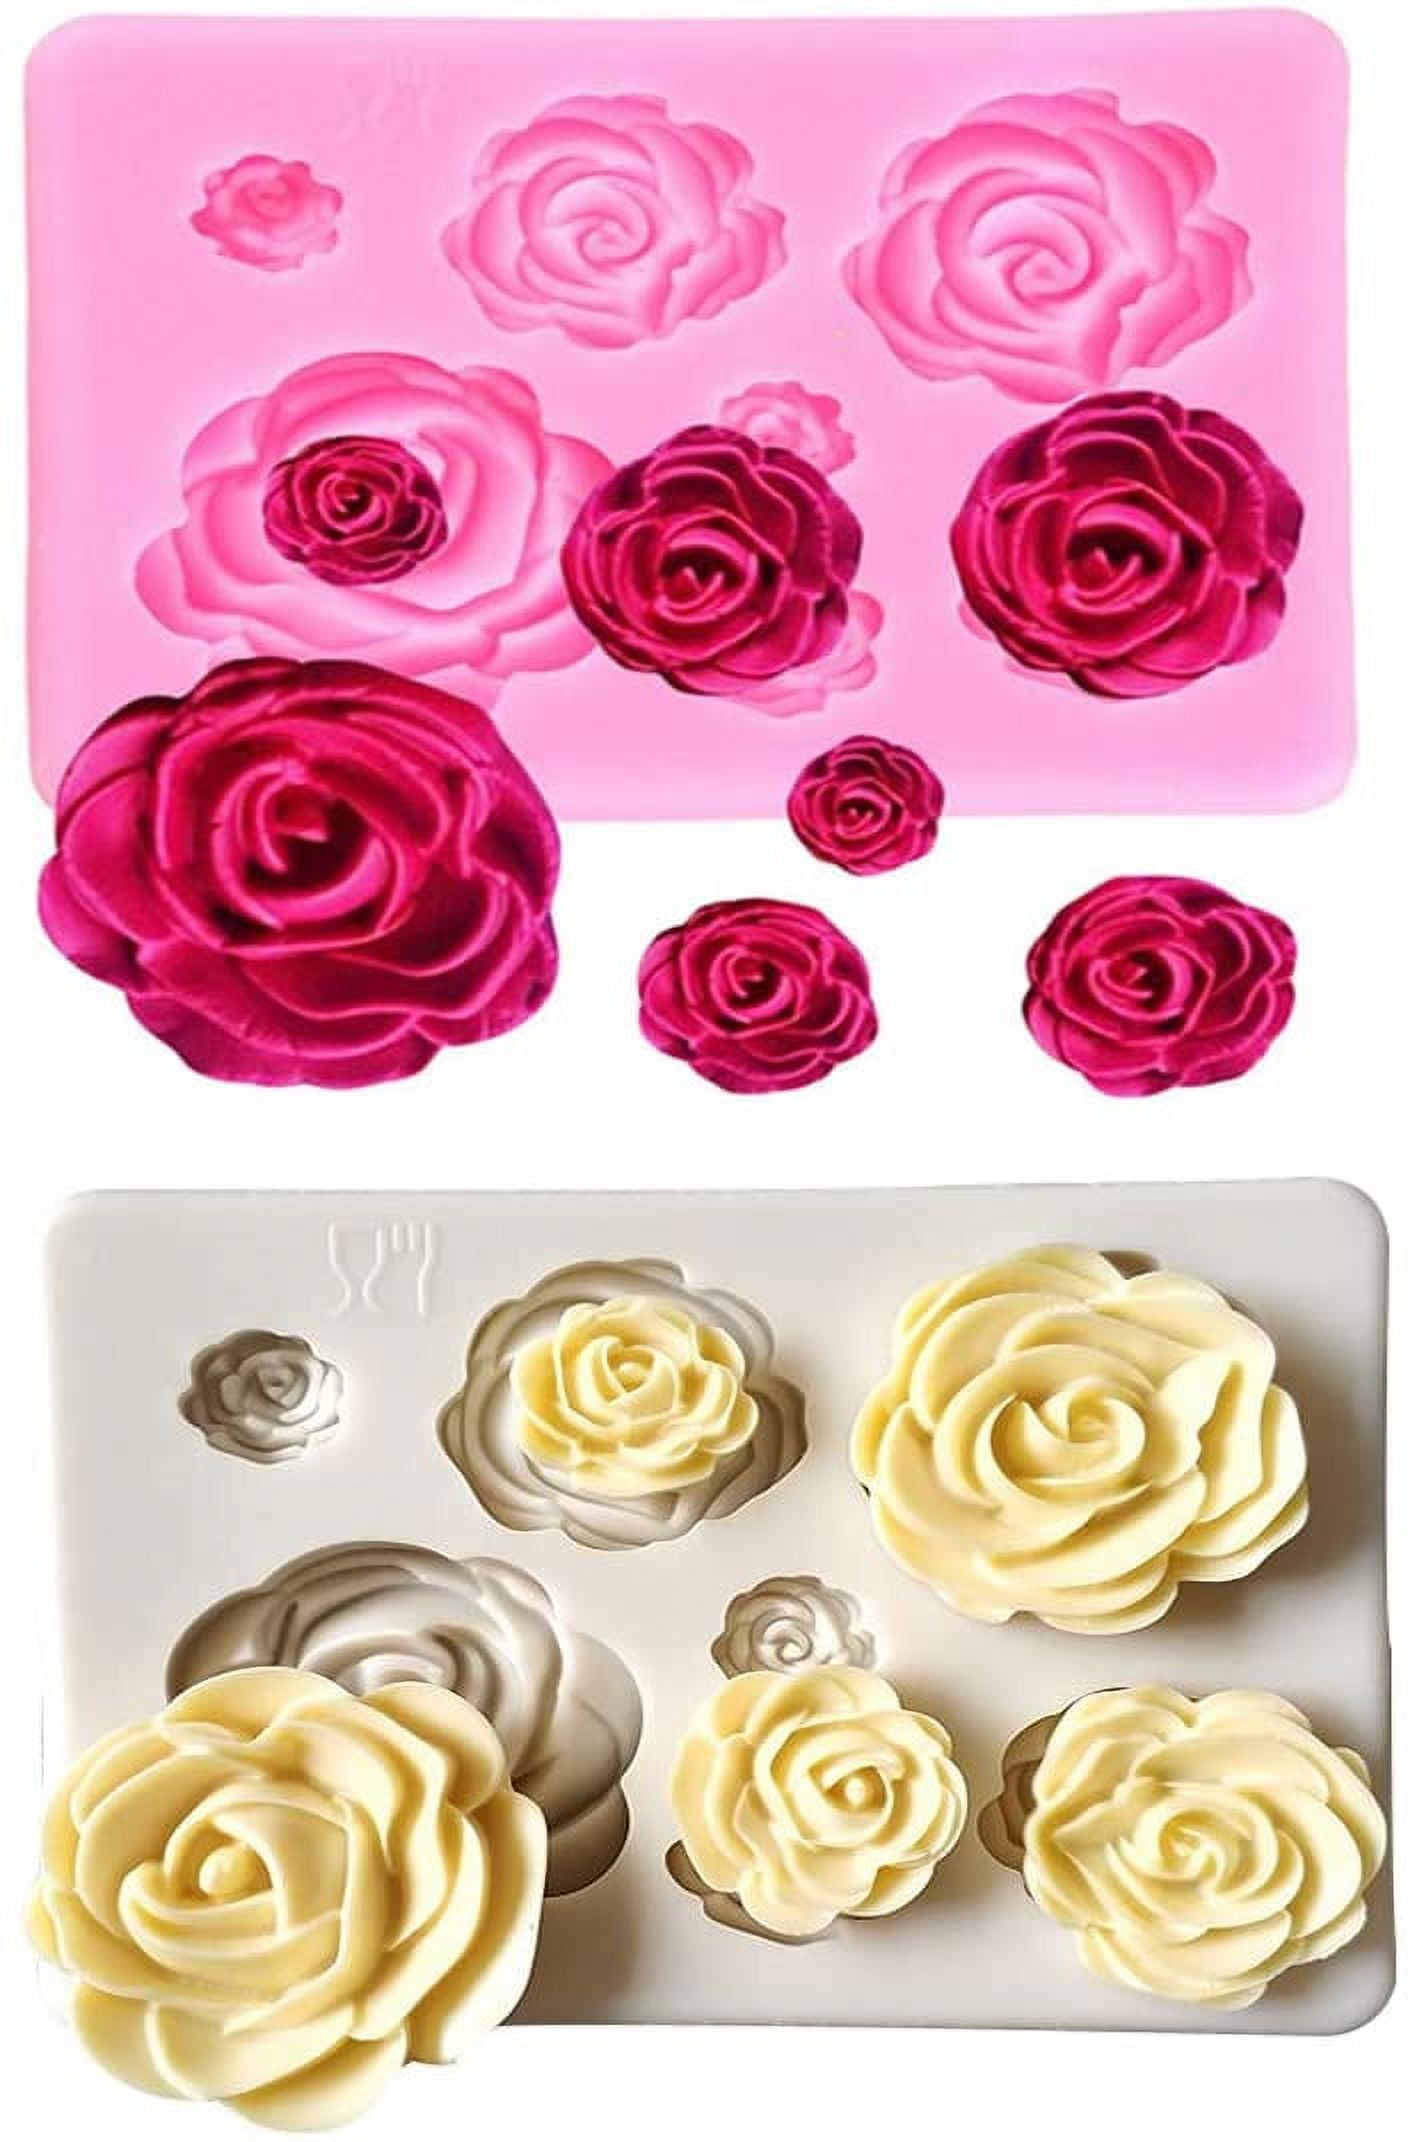 Food Grade Rose Flower Silicone Mold DIY Handmade